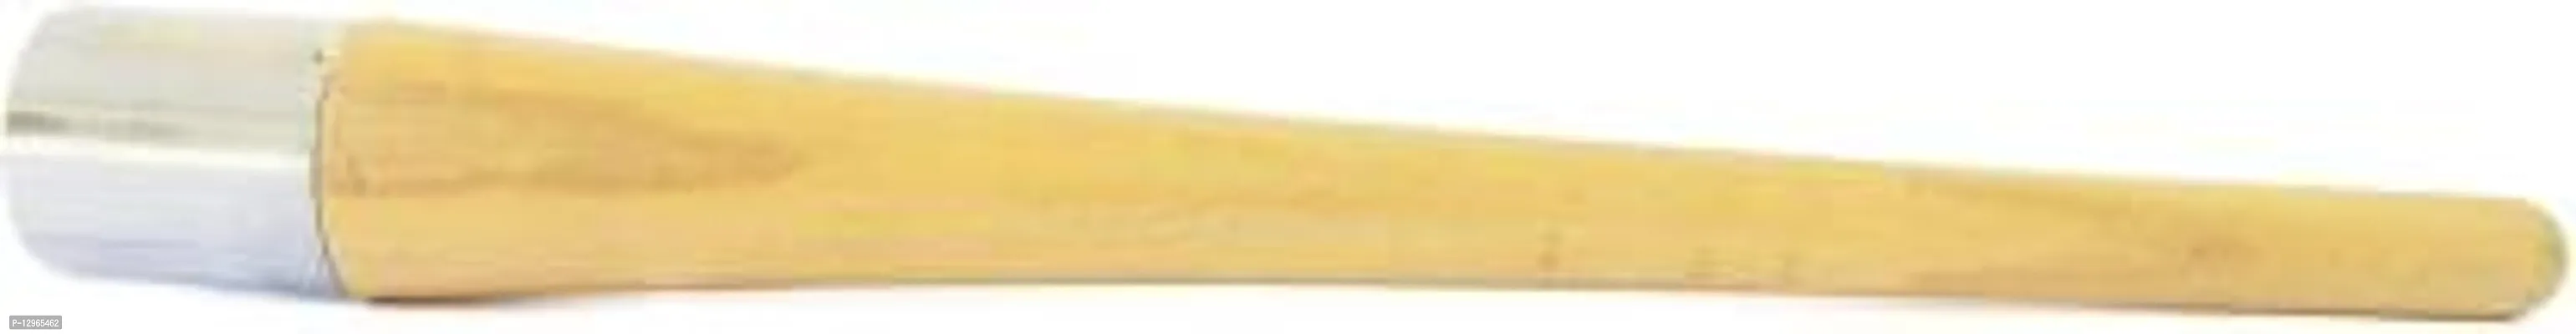 Cricket Bat Cone (Grip Applicator)&nbsp;(Brown, Pack of 1)